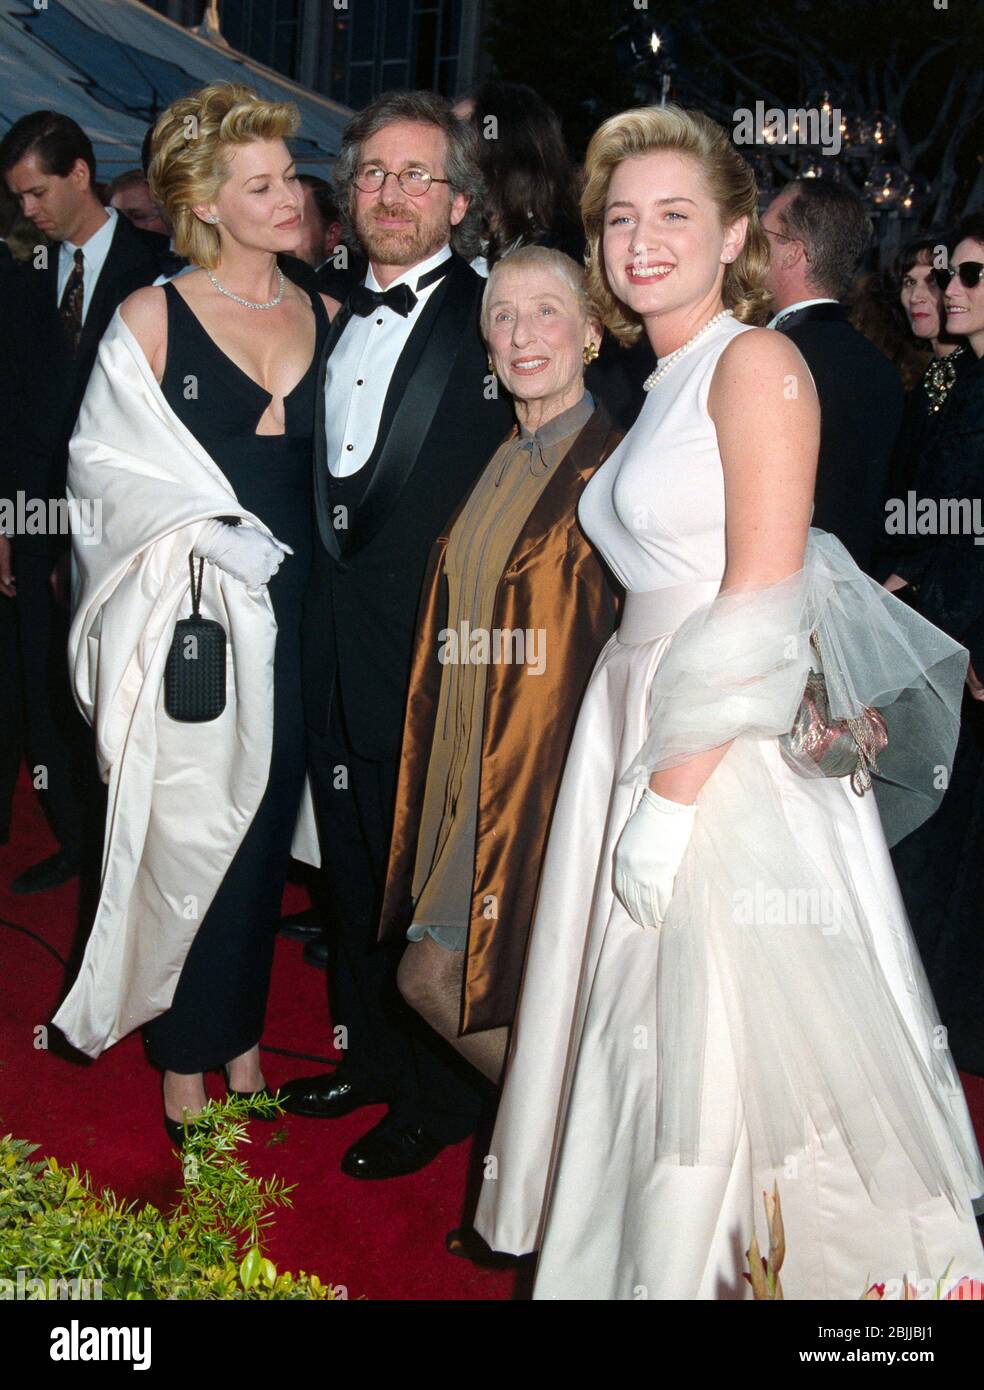 LOS CA. c.1994: Steven Spielberg & wife actress Kate her daughter Jessica